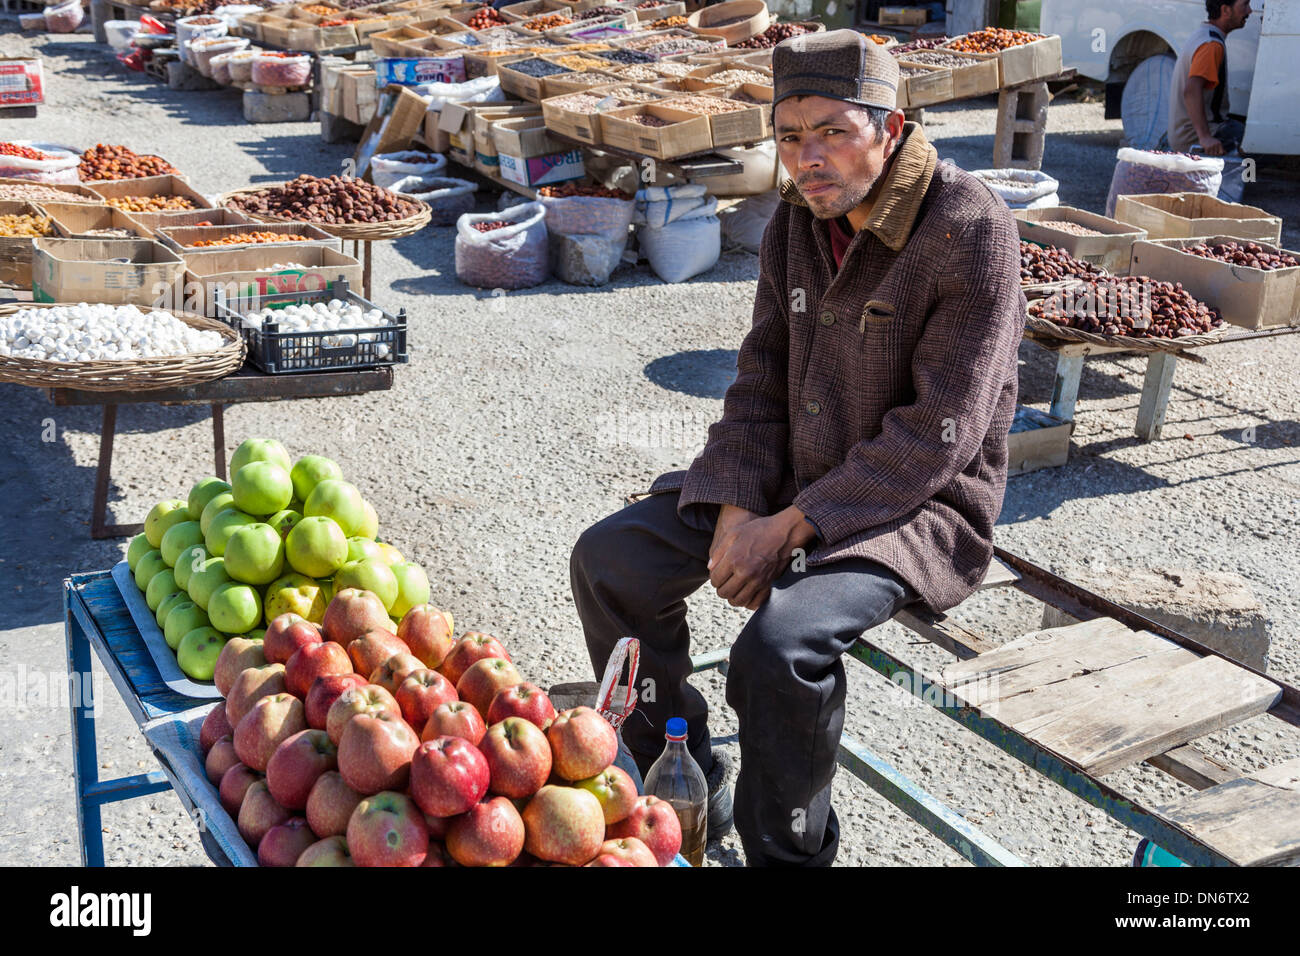 Man selling apples in an outdoor market, near Samarkand, Uzbekistan Stock Photo